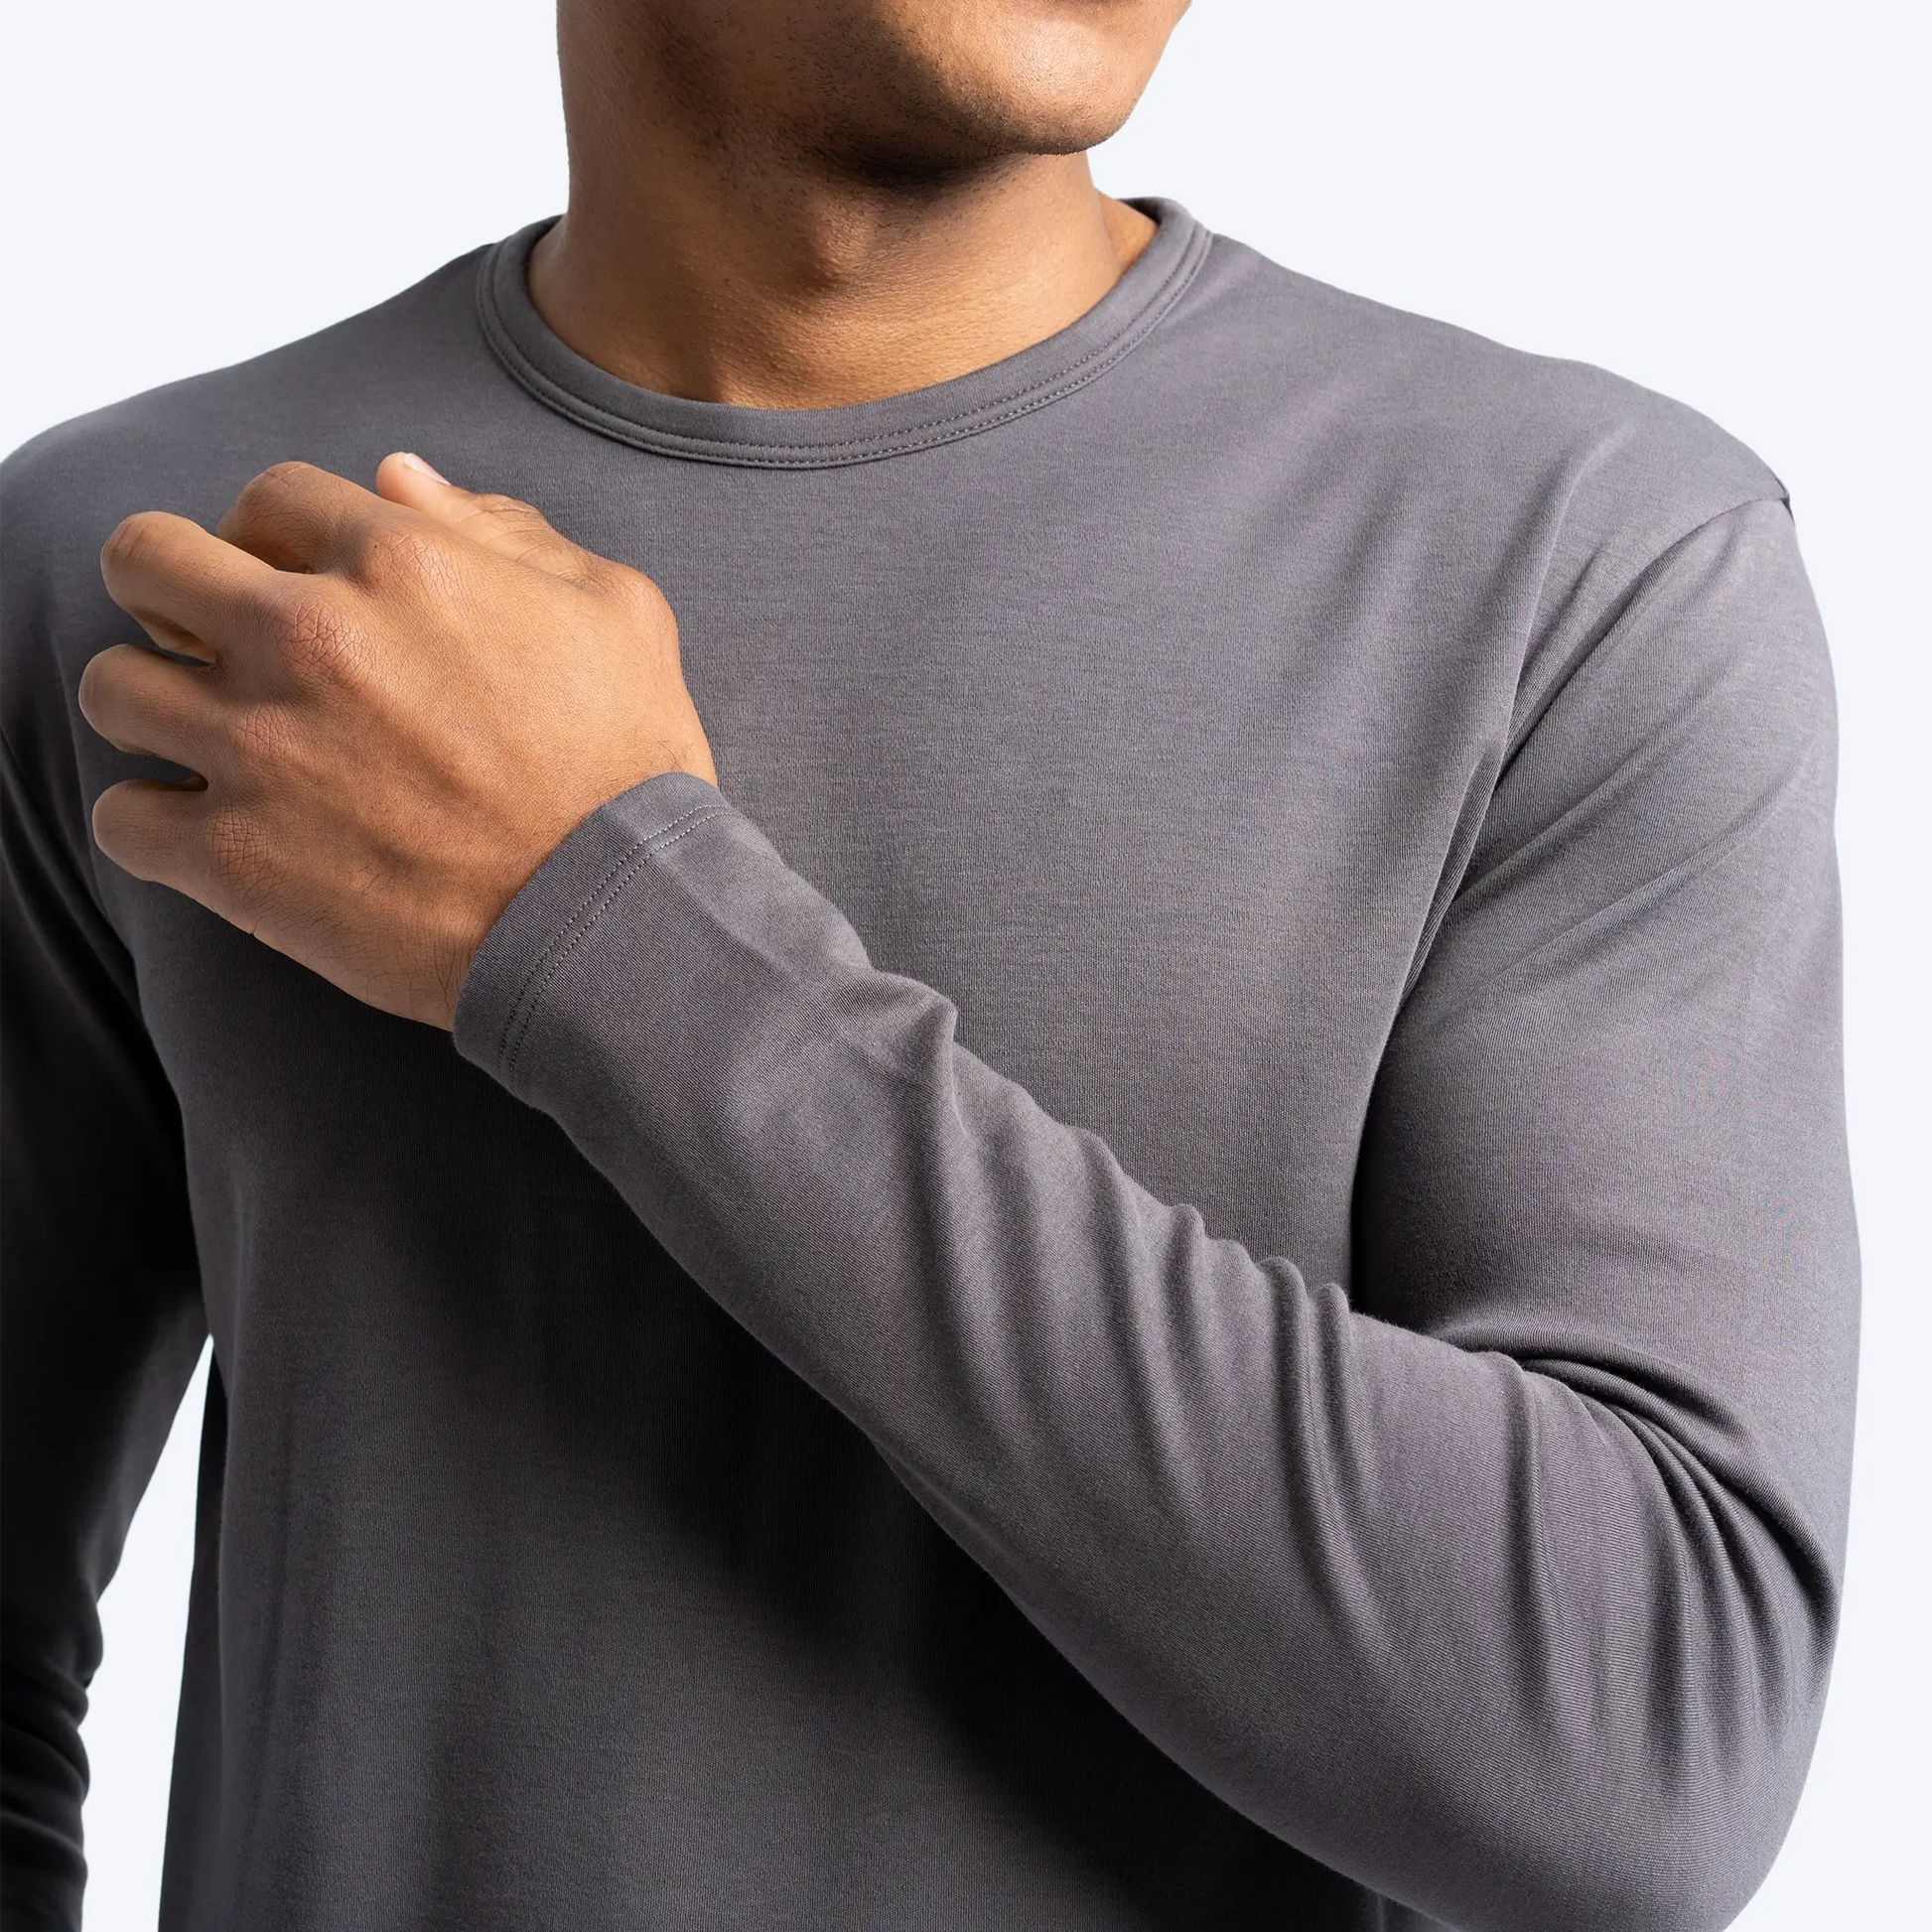 mens indoor tshirt long sleeve color gray